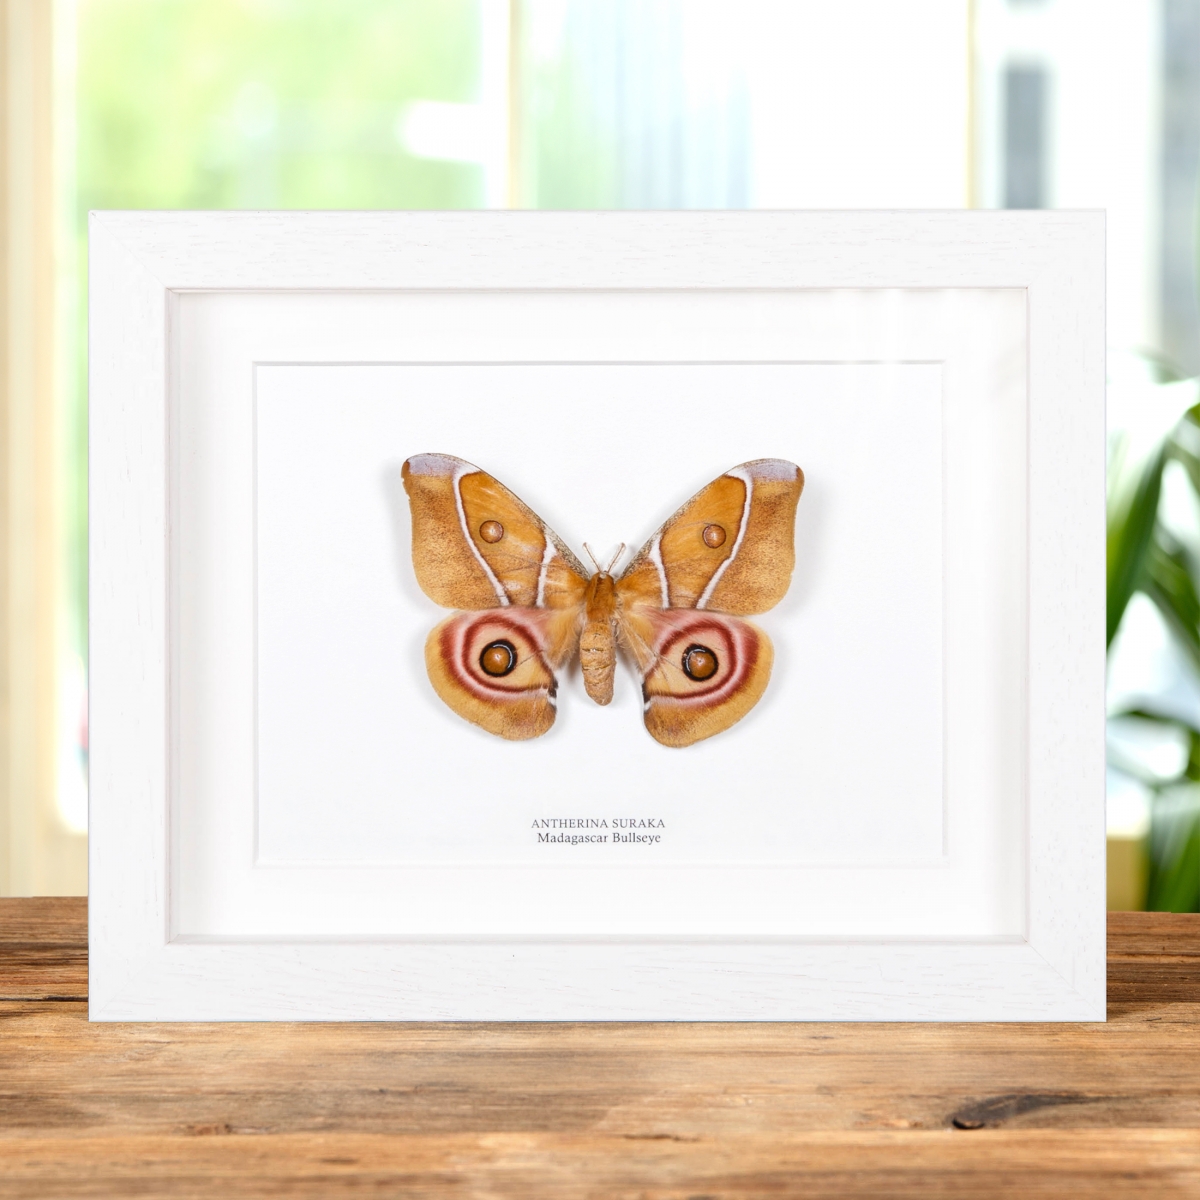 The Madagascar Bullseye Moth In Box Frame (Antherina suraka)